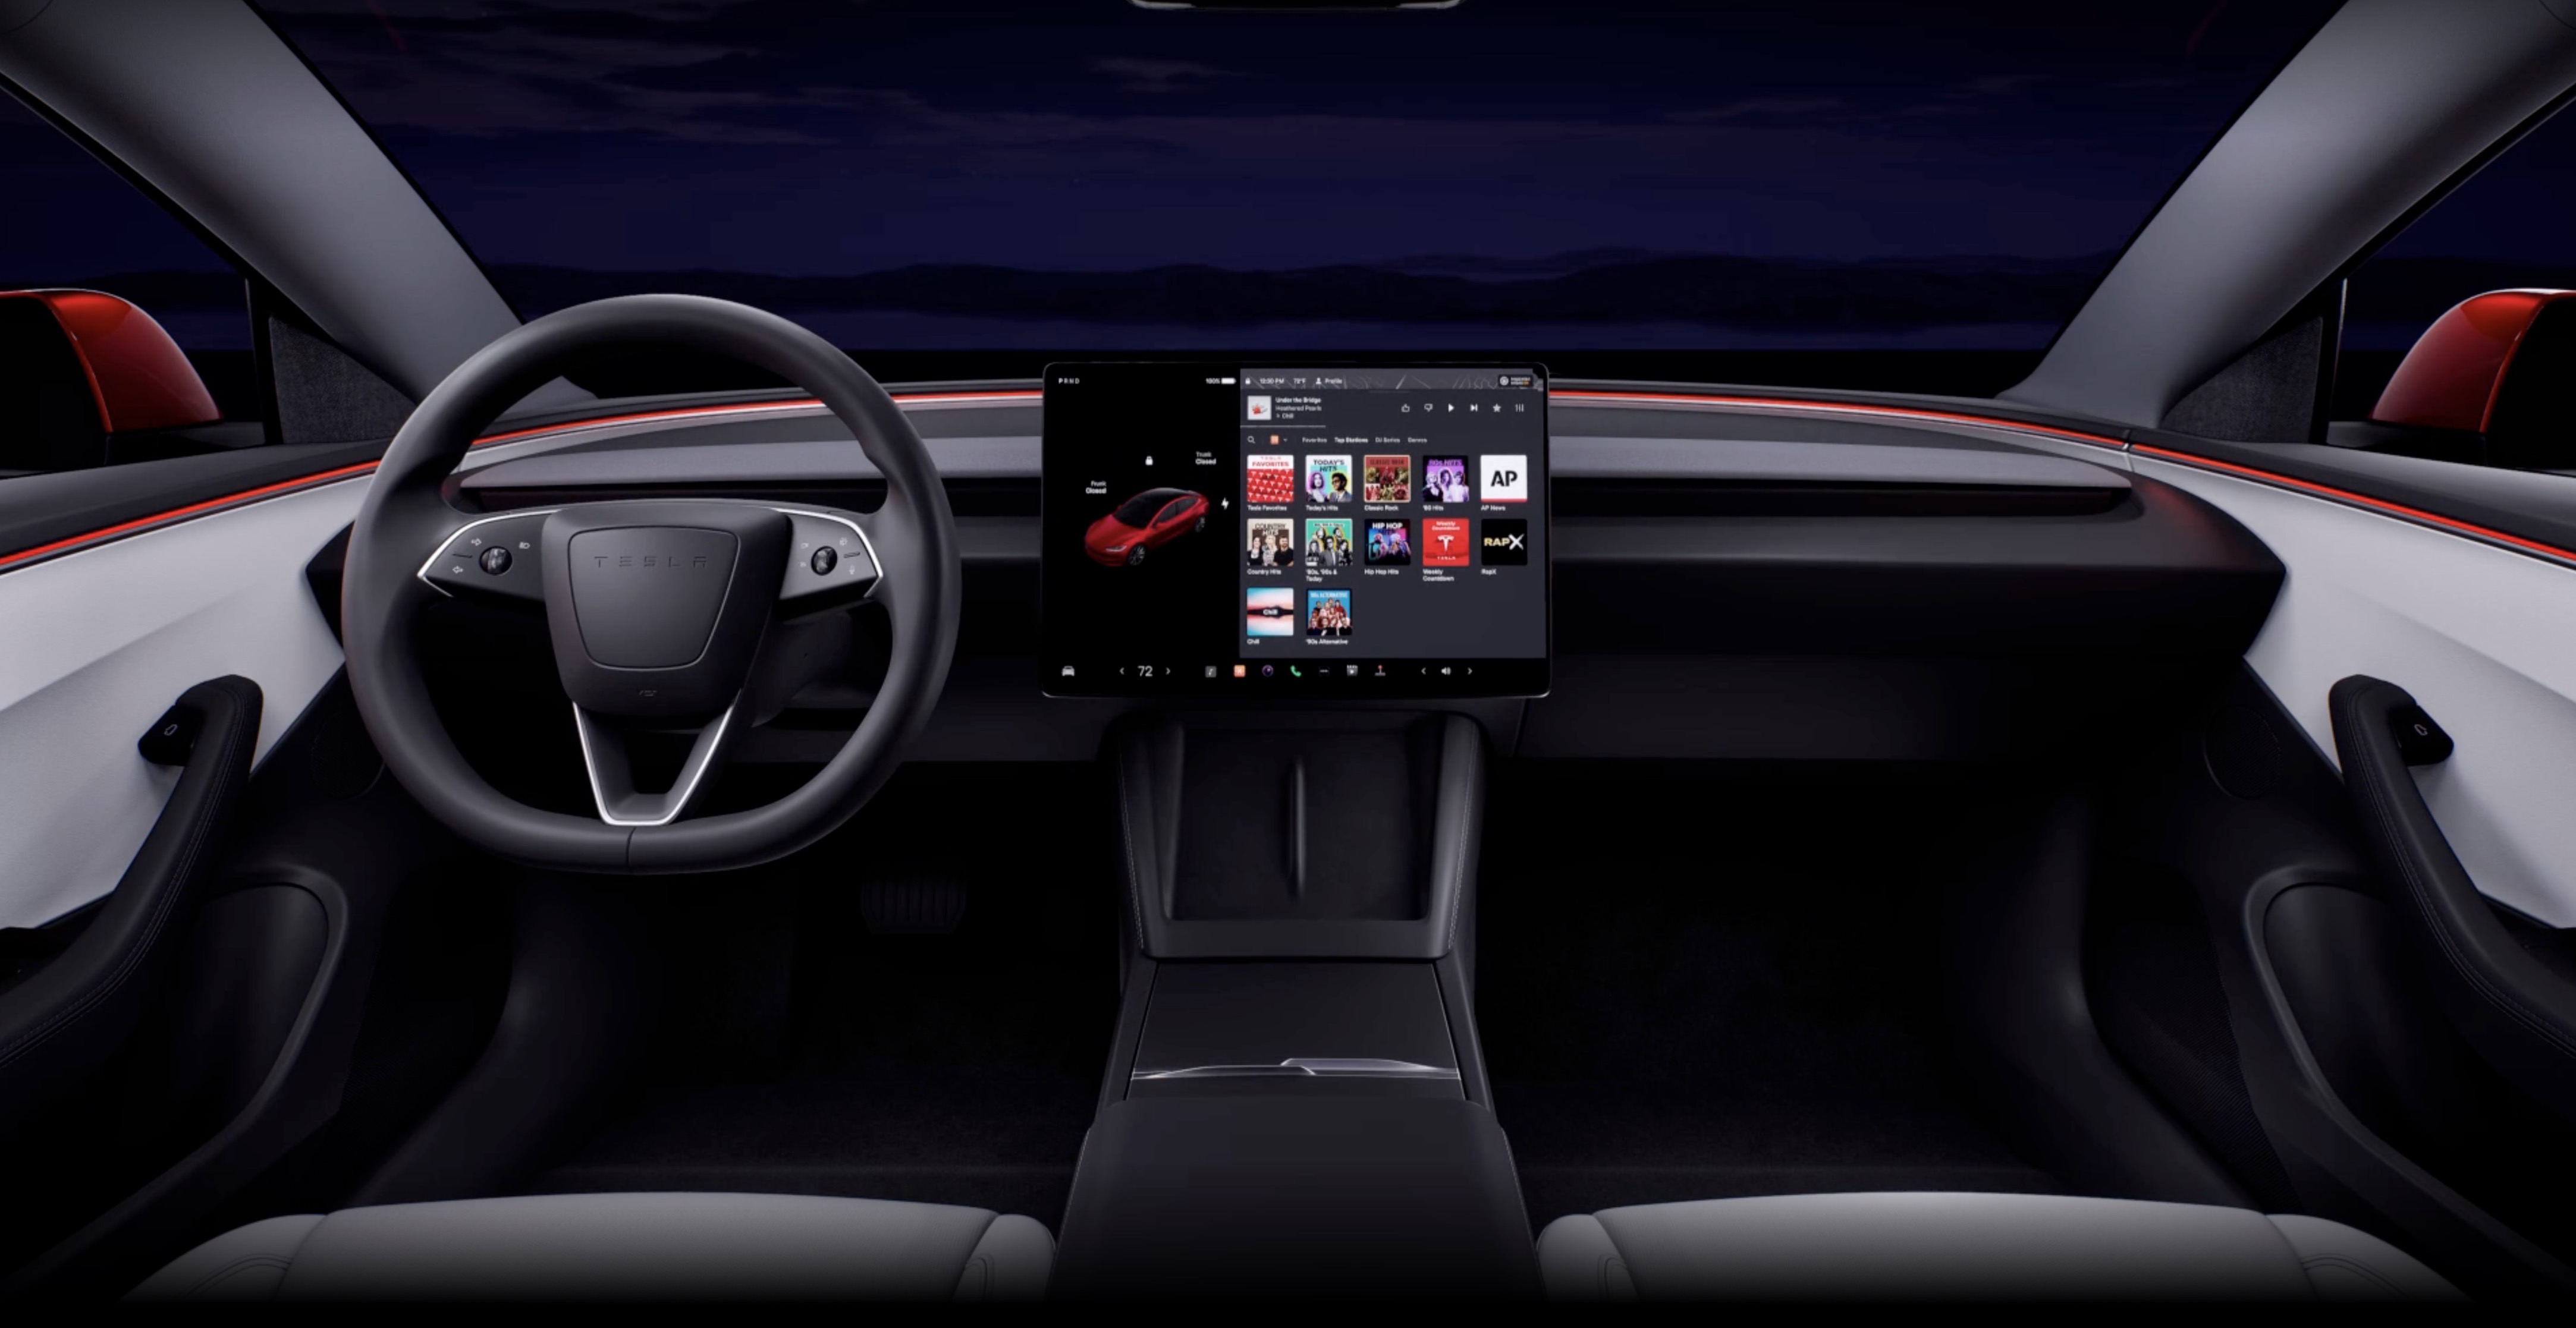 Tesla Model 3 'Highland' Imagined in Concept Images [PICS